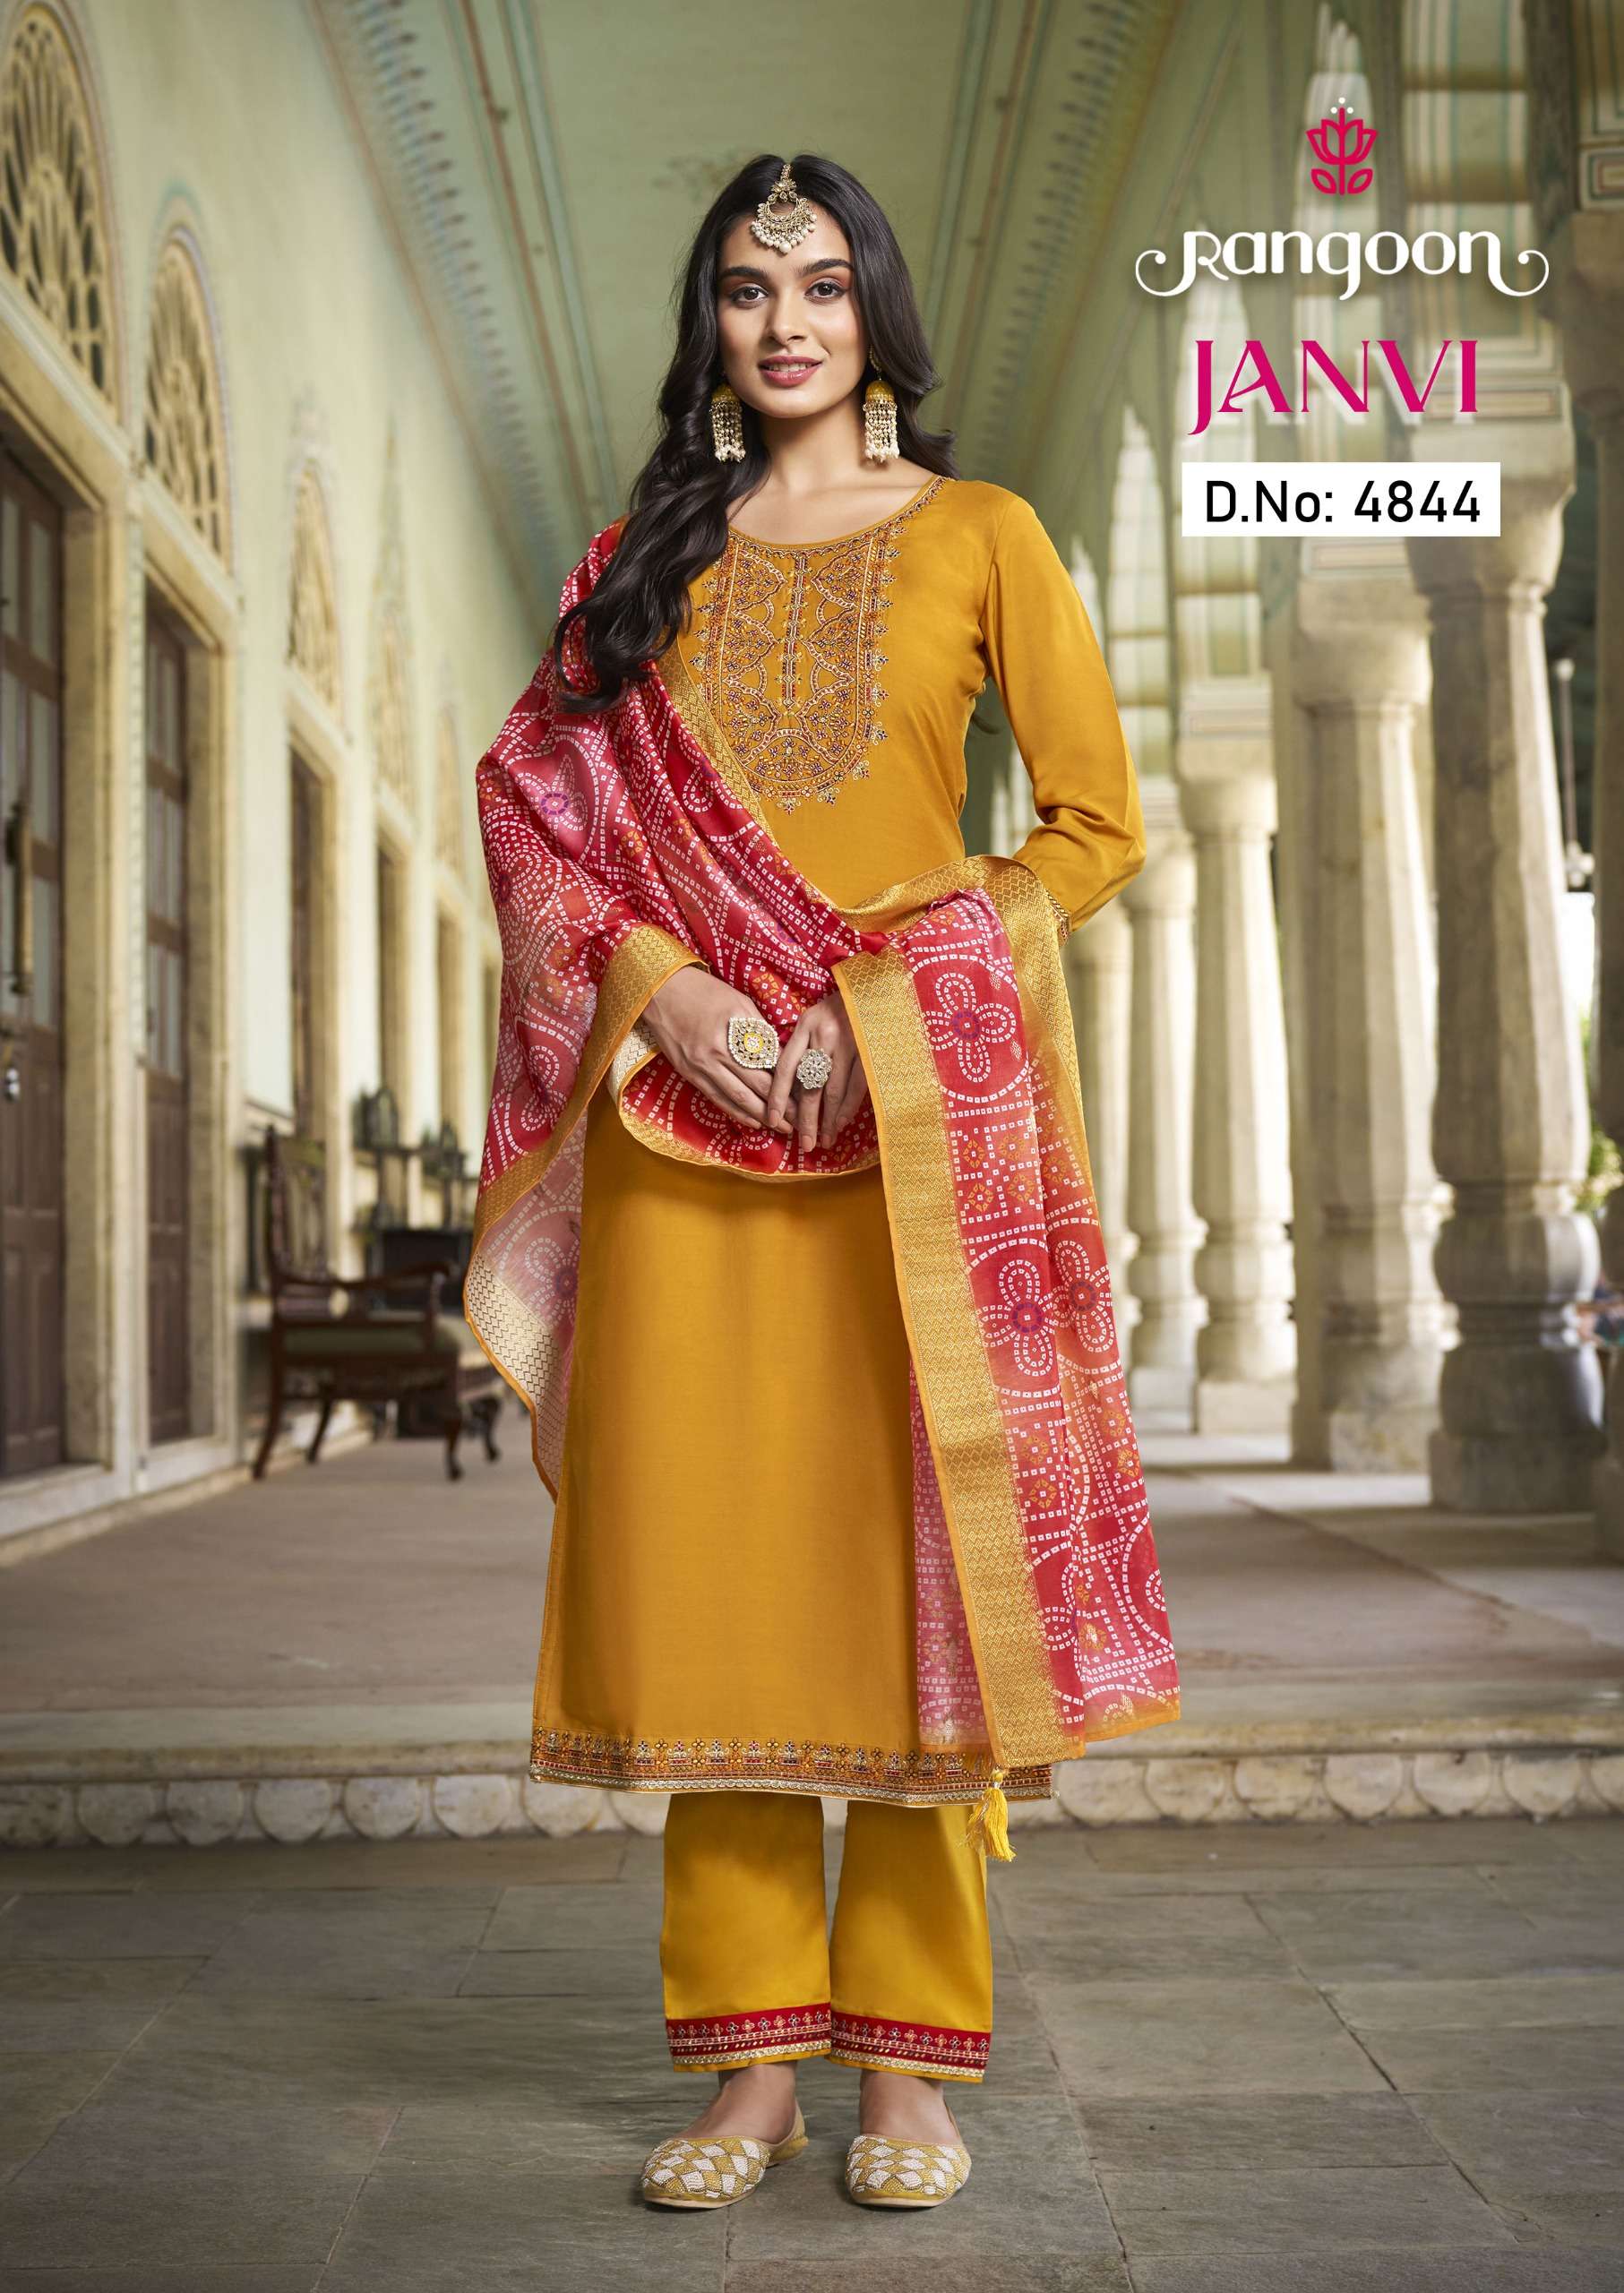 rangoon janvi 4841-4844 series latest designer wear kurti wholesaler surat gujarat